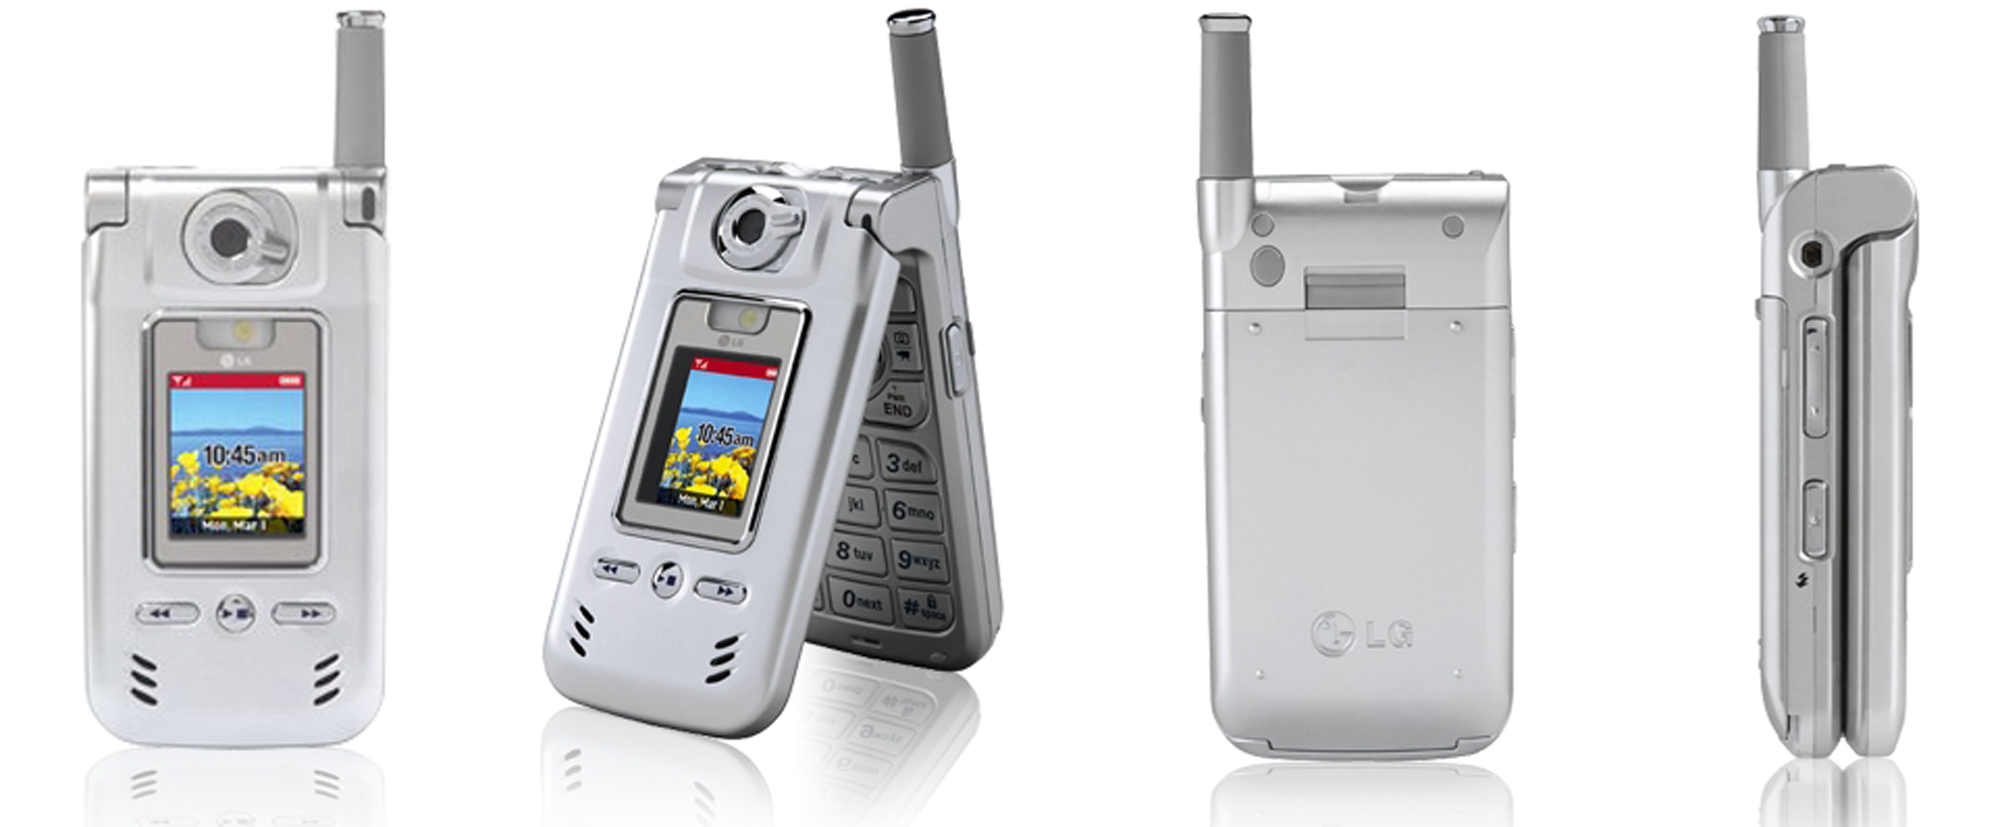 Телефон LG vx8000